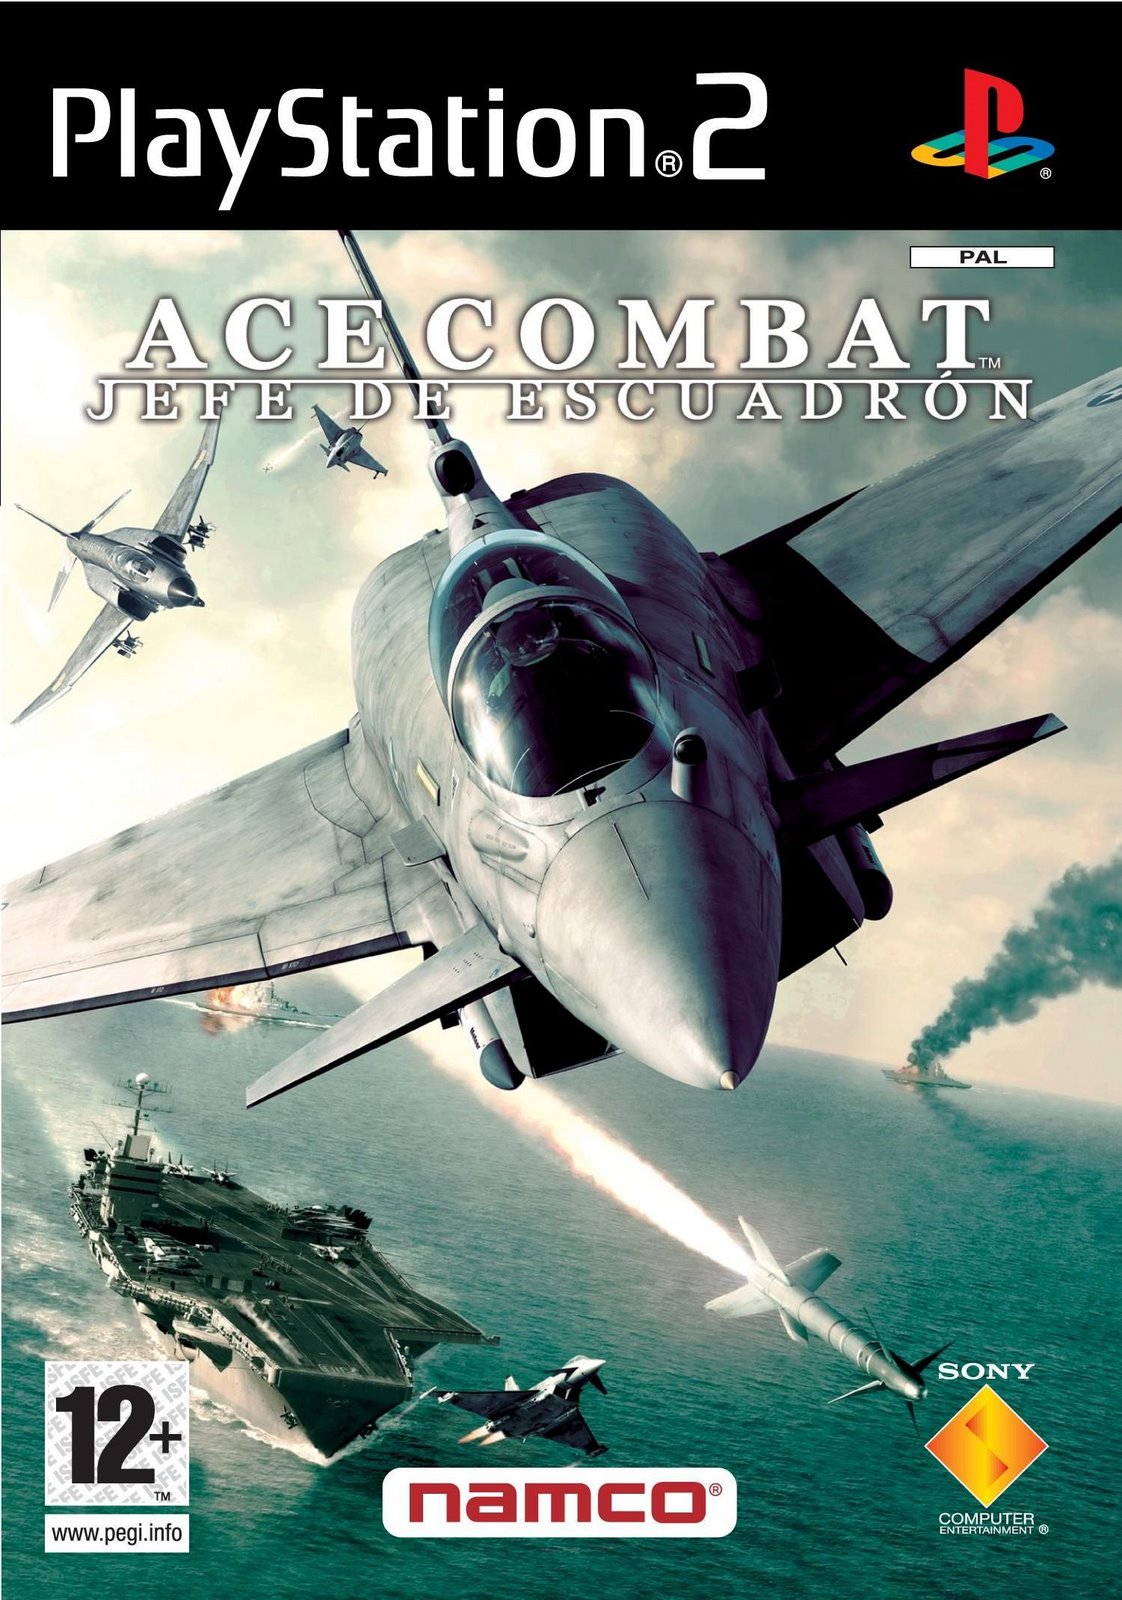 Ace Combat 5: The Unsung War #6